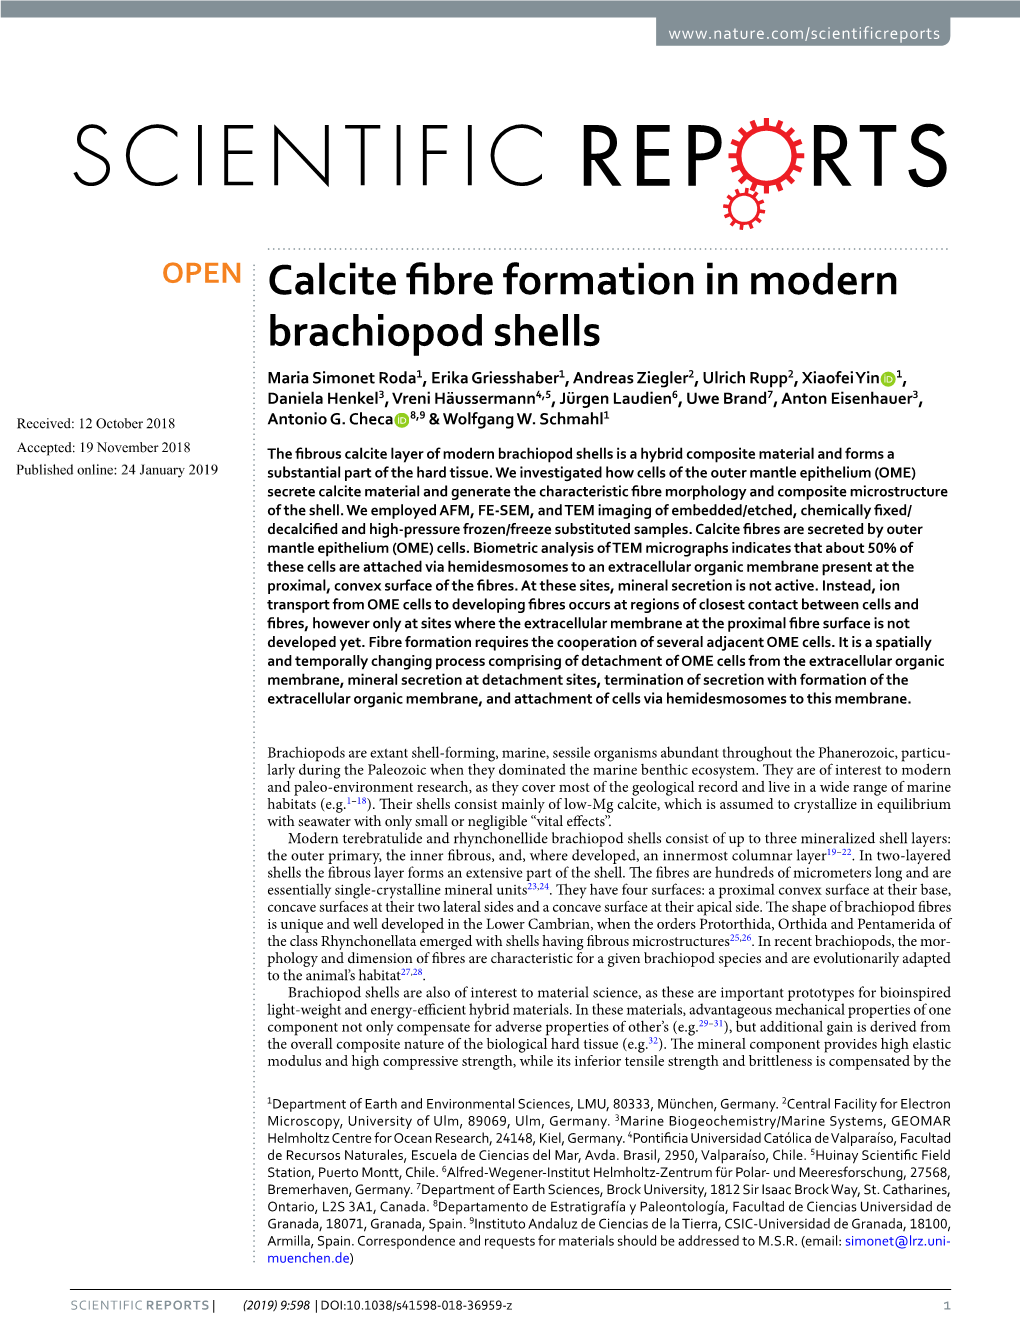 Calcite Fibre Formation in Modern Brachiopod Shells